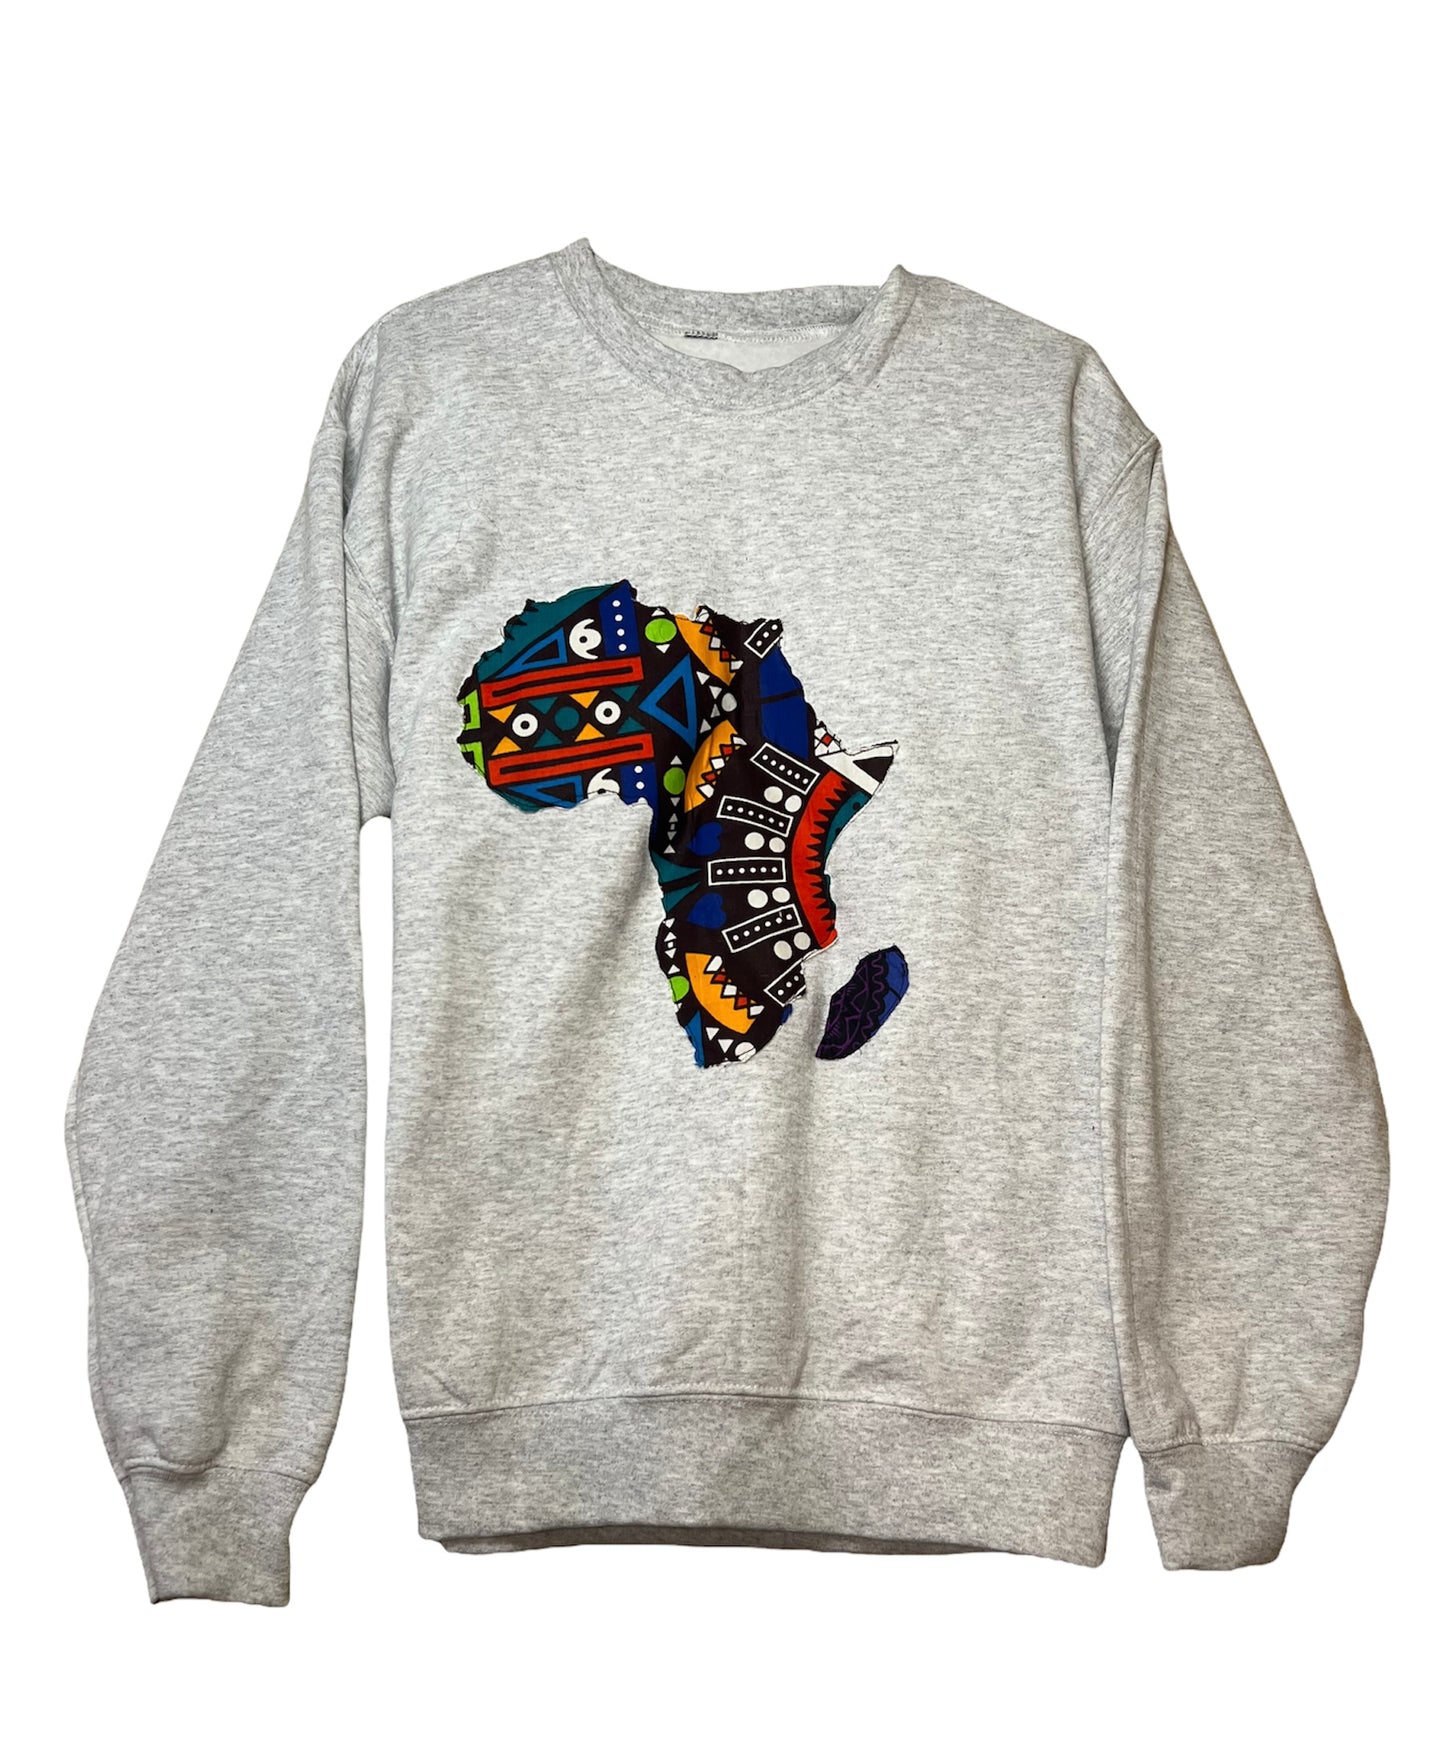 Grey Long Sleeve Sweatshirt with Vibrant Tribal Print African Map